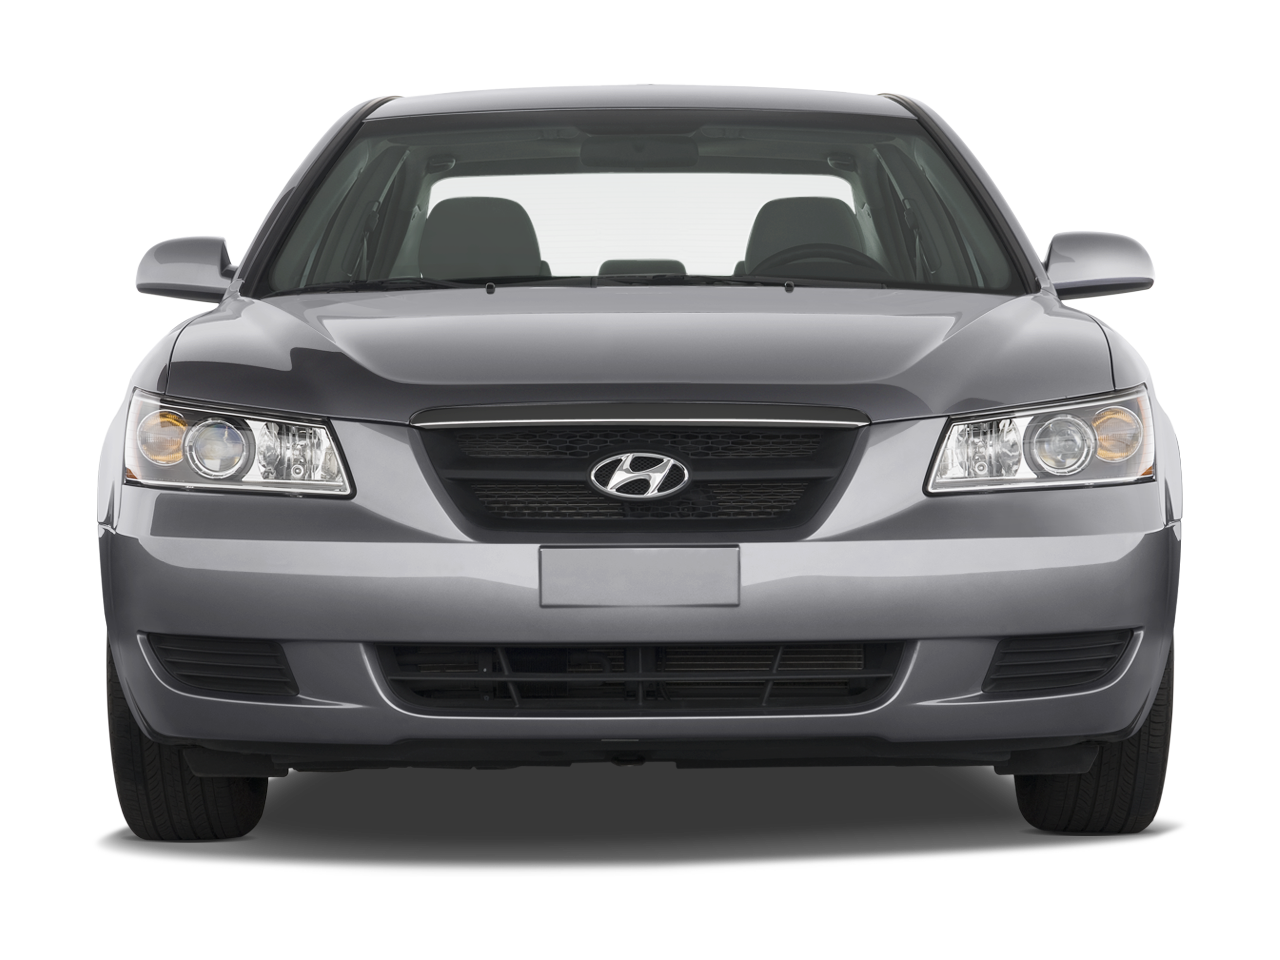 Соната 2008 г. Hyundai Sonata 2008. Хендай Соната NF 2008. Hyundai Sonata 2008г. Хендэ Sonata 2008.